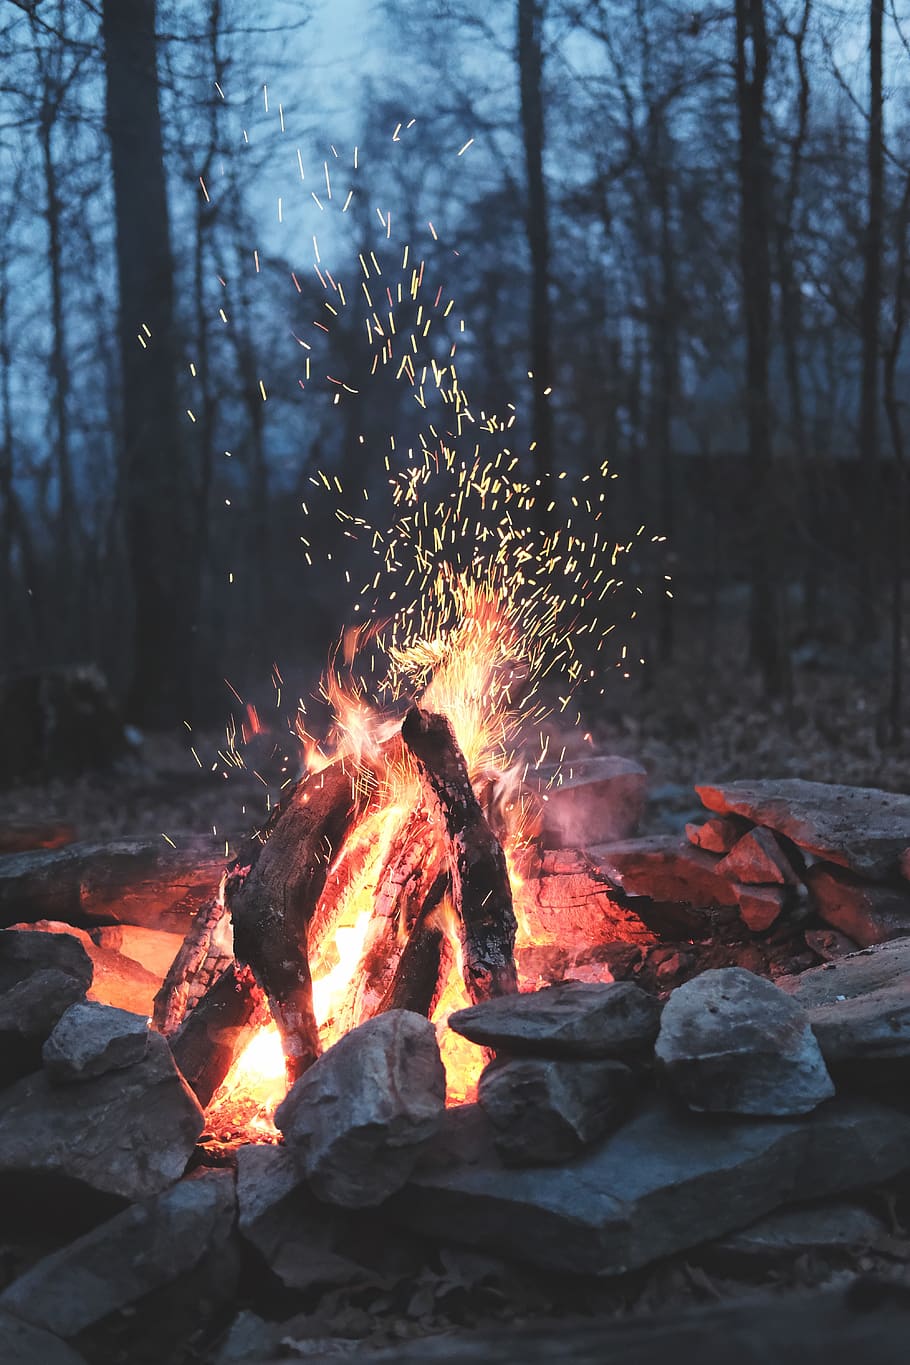 naturaleza, fuego, hoguera, campamento, al aire libre, bosque, chispa, piedra, madera, quema